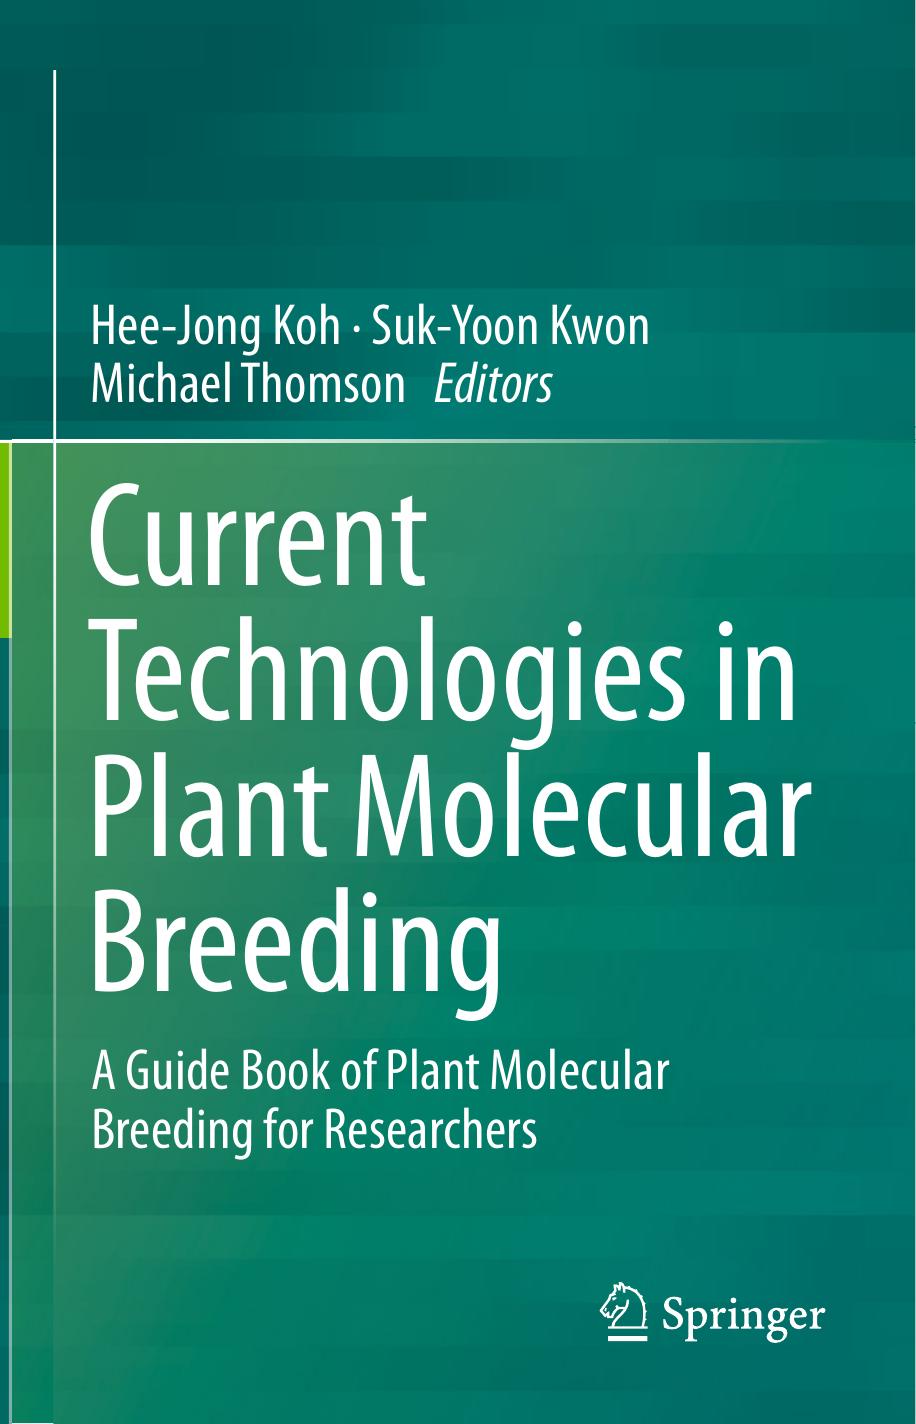 Current Technologies in Plant Molecular Breeding 2015